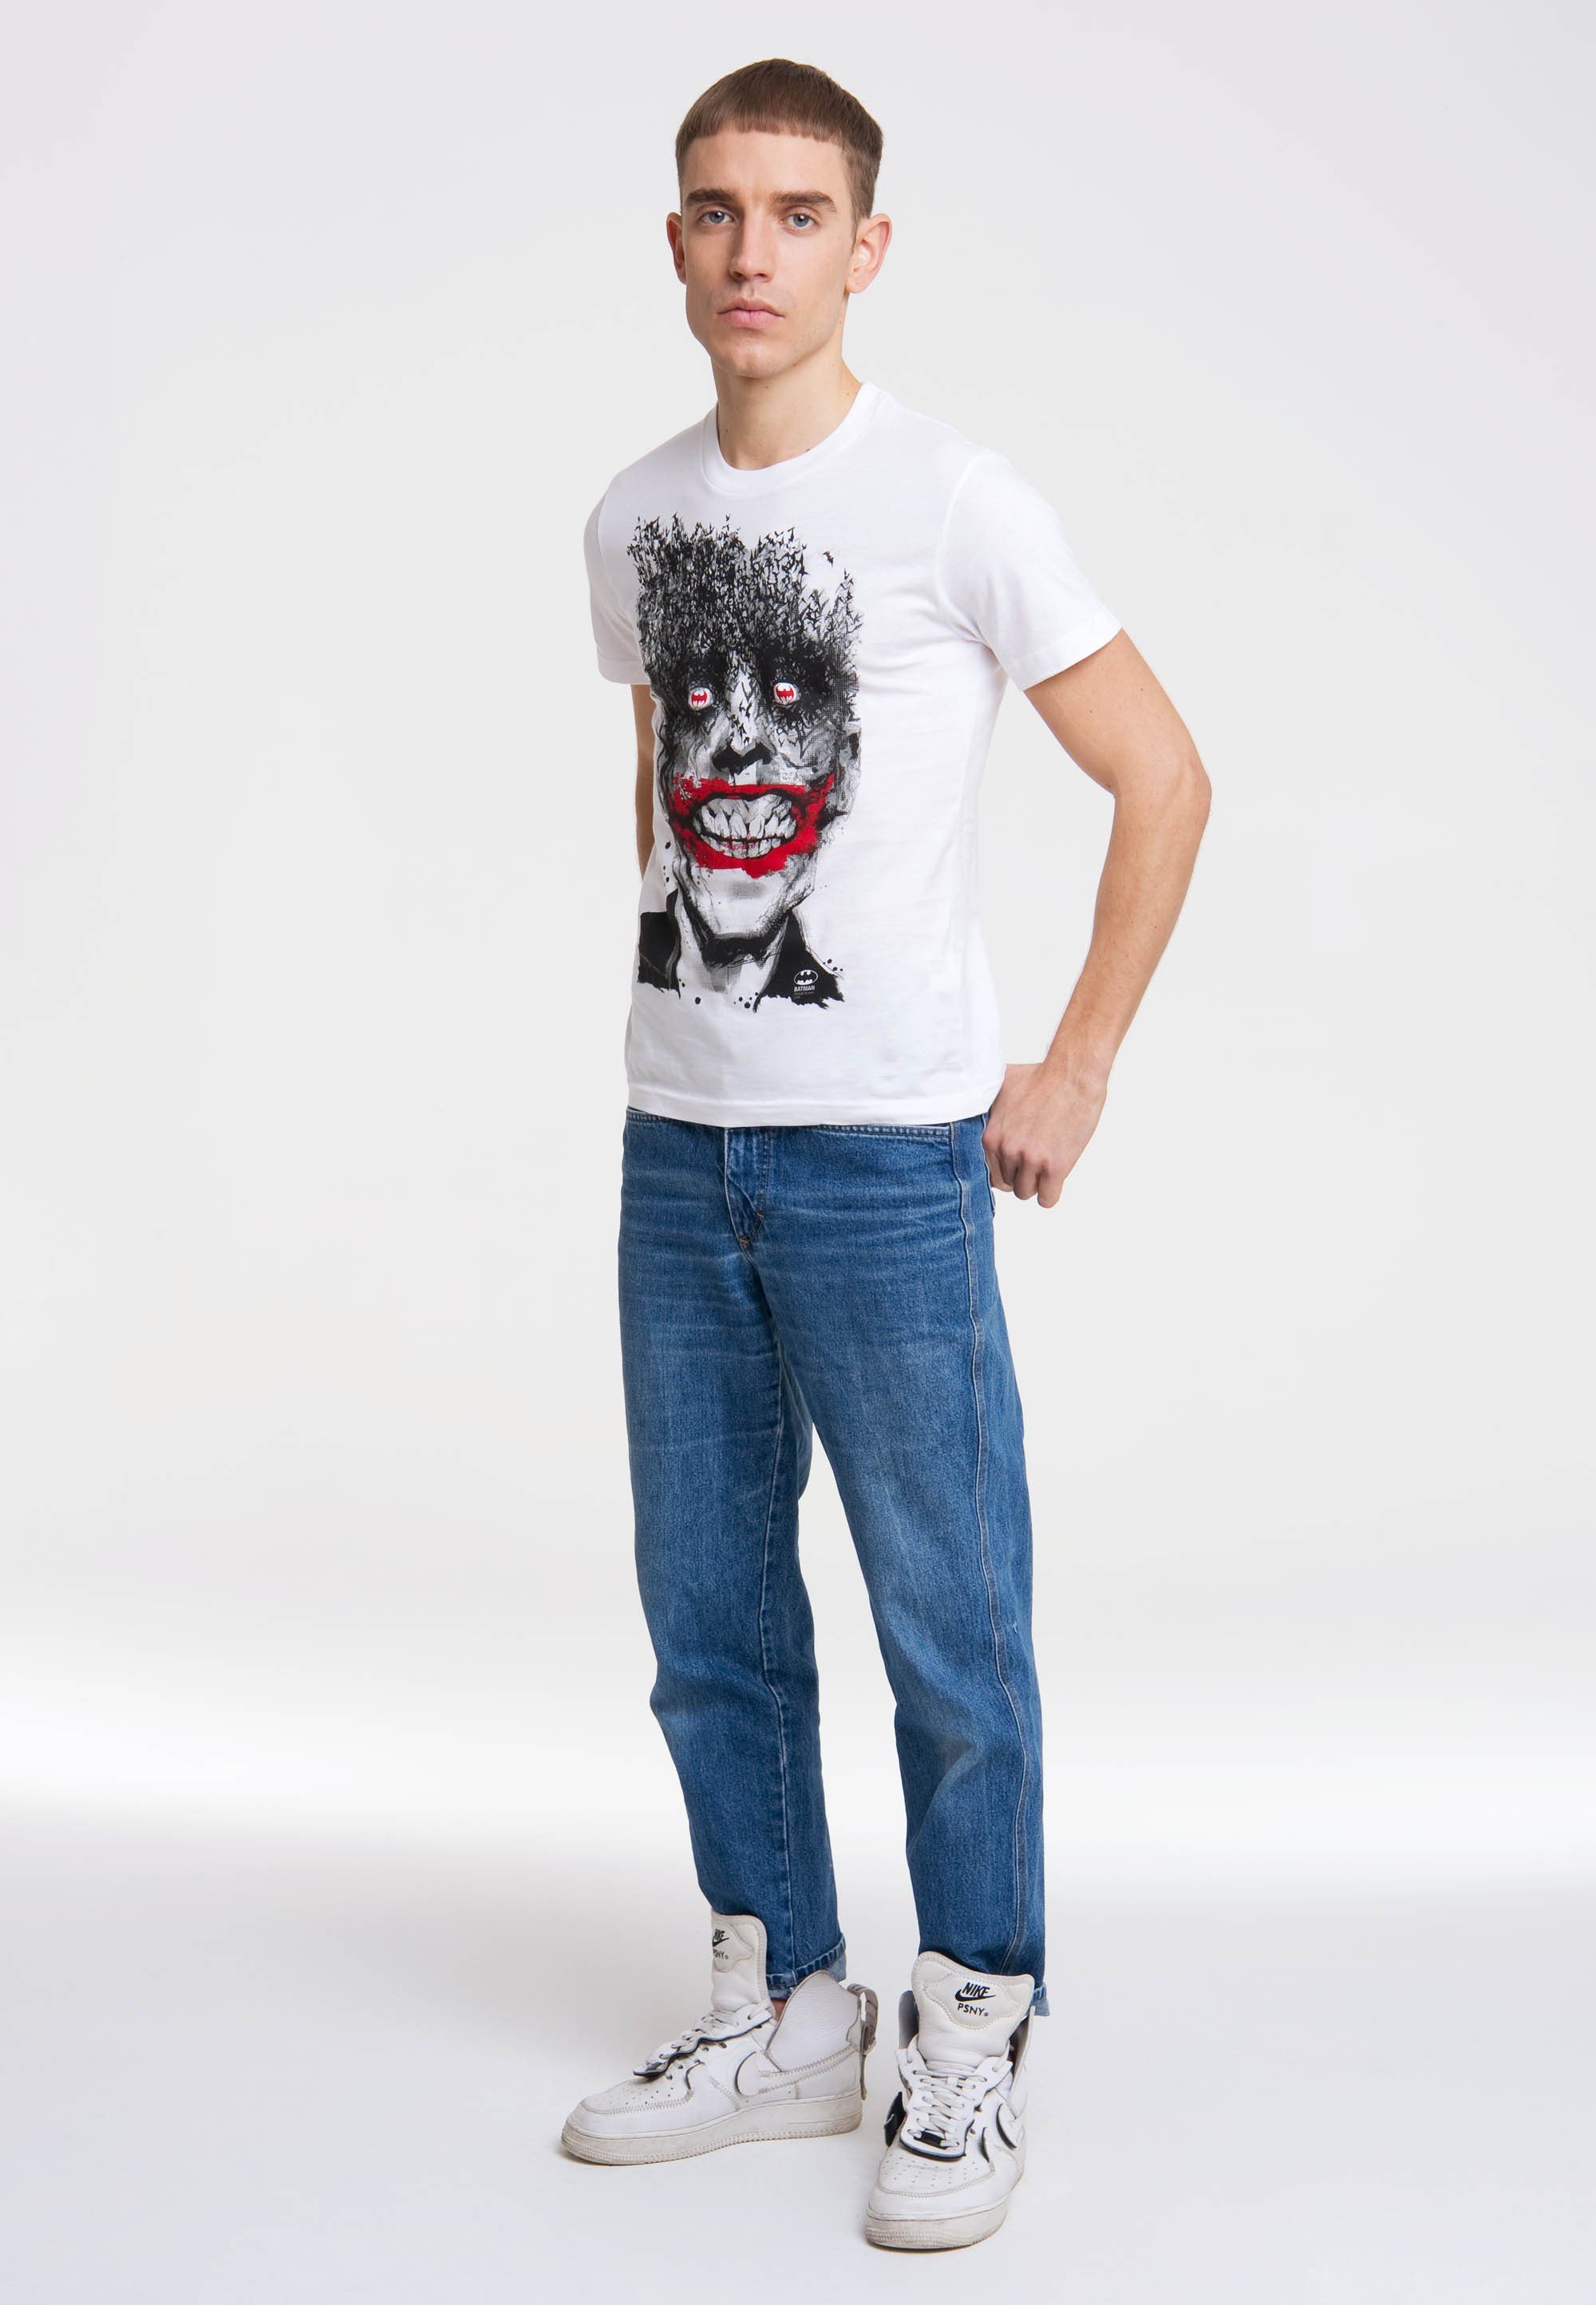 LOGOSHIRT T-Shirt DC Batman - Joker Bats mit schaurigem Joker-Frontprint,  Raffinierter Rundhals-Ausschnitt sorgt für einen tollen Sitz